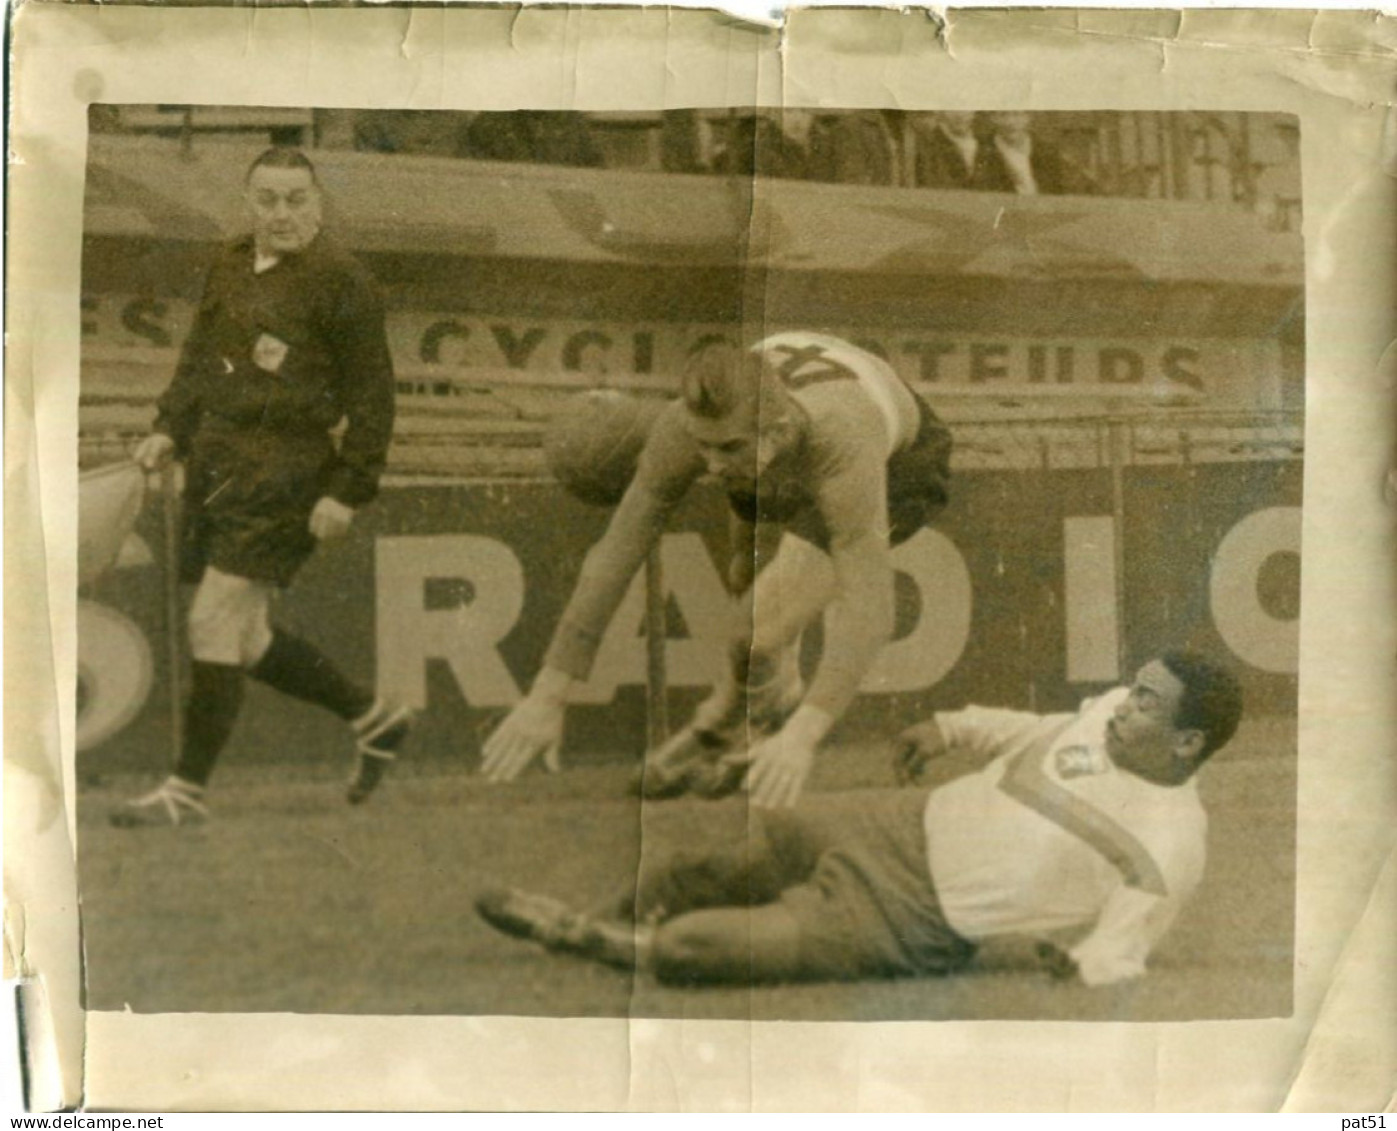 SPORTS - FOOTBALL : Photo - RACING PARIS Vs LYON / UGORENKO Vs NINEL - 1962 ? - Football